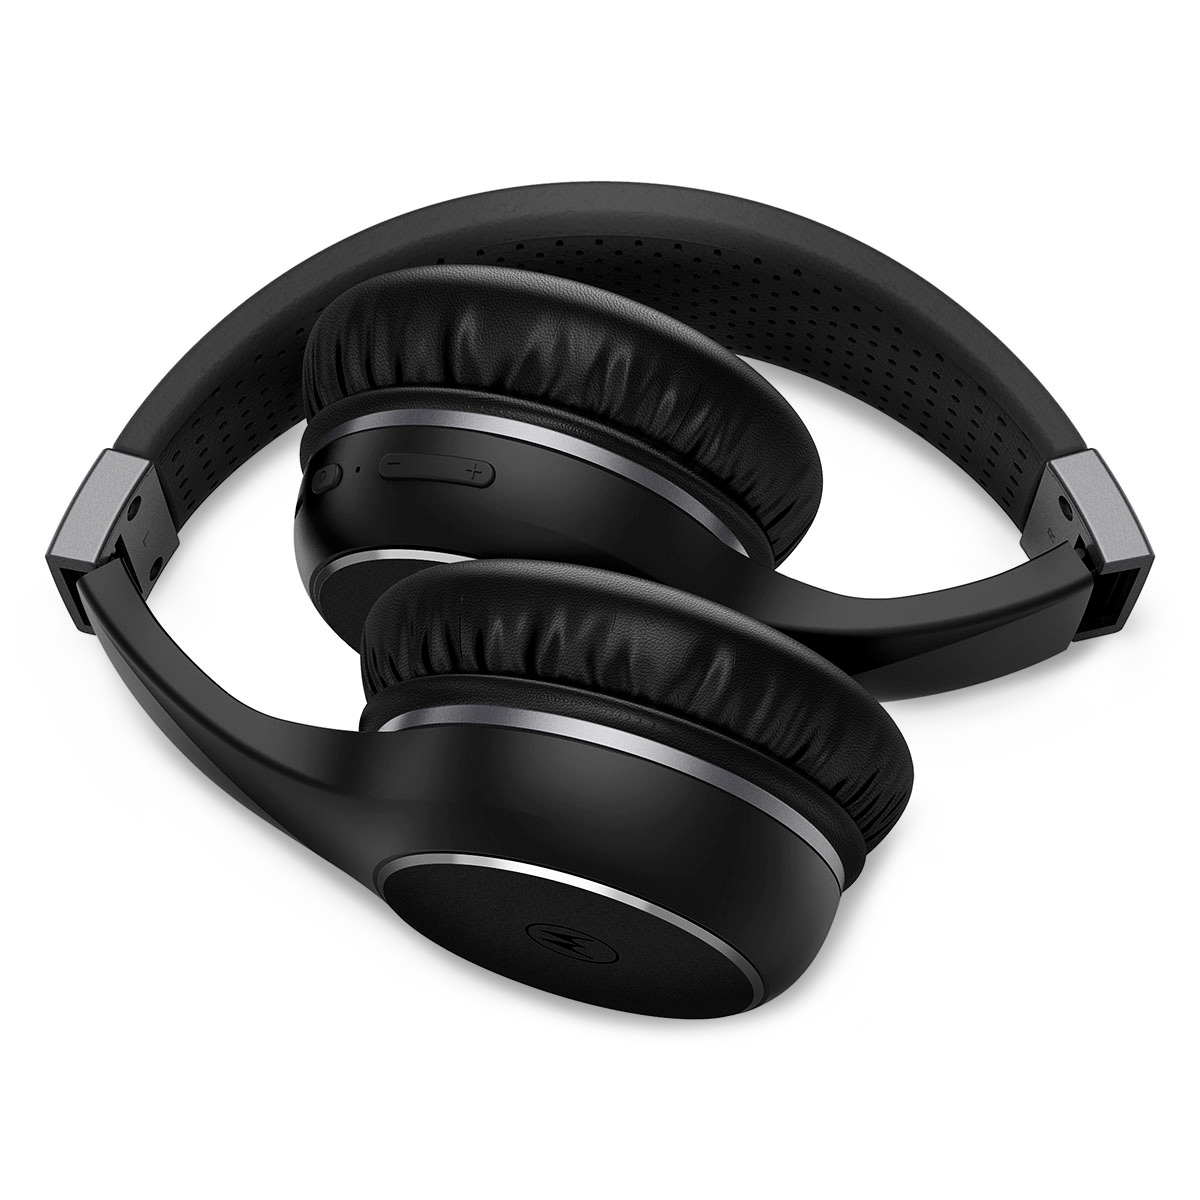 Audífonos Bluetooth Auvio Active Noise Cancelling / On ear / Negro, On ear, Audífonos, Audio y video, Todas, Categoría